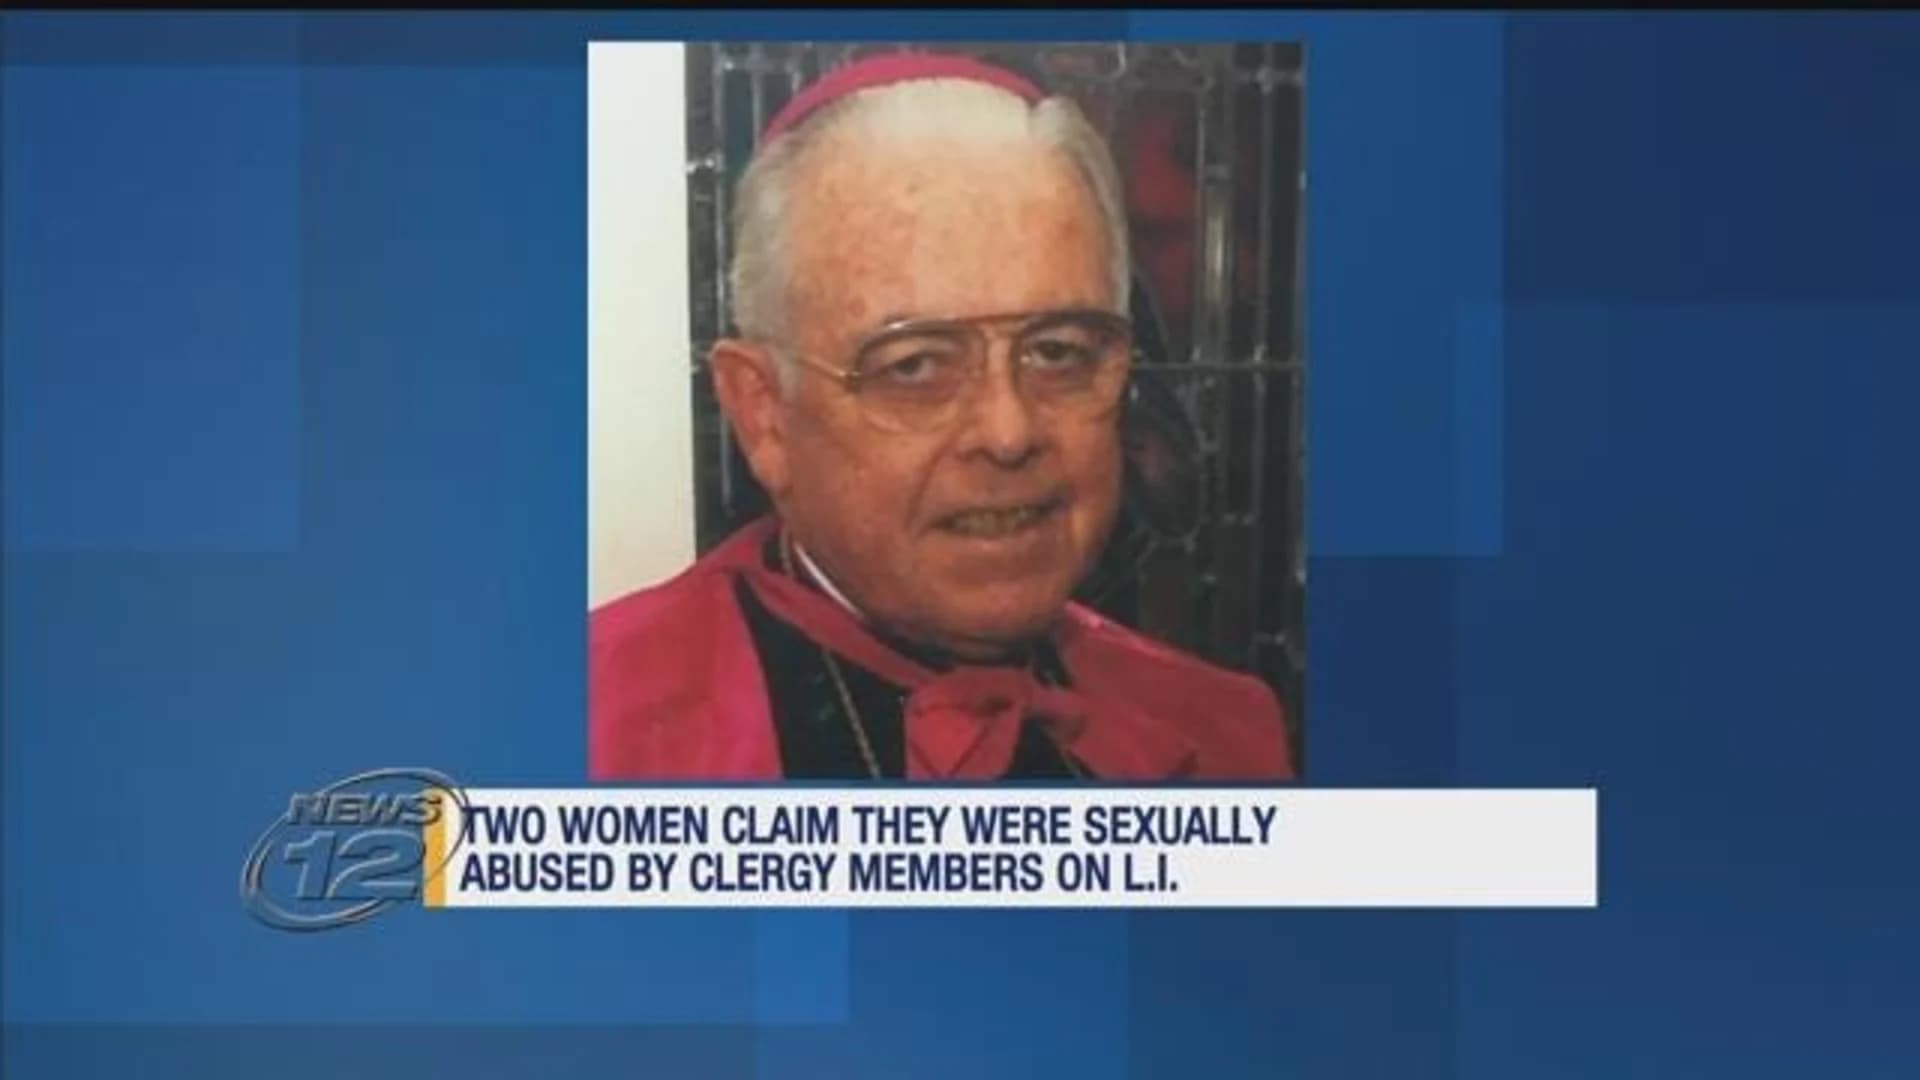 2 women claim late Bishop McGann, LI clergy members sexually abused them